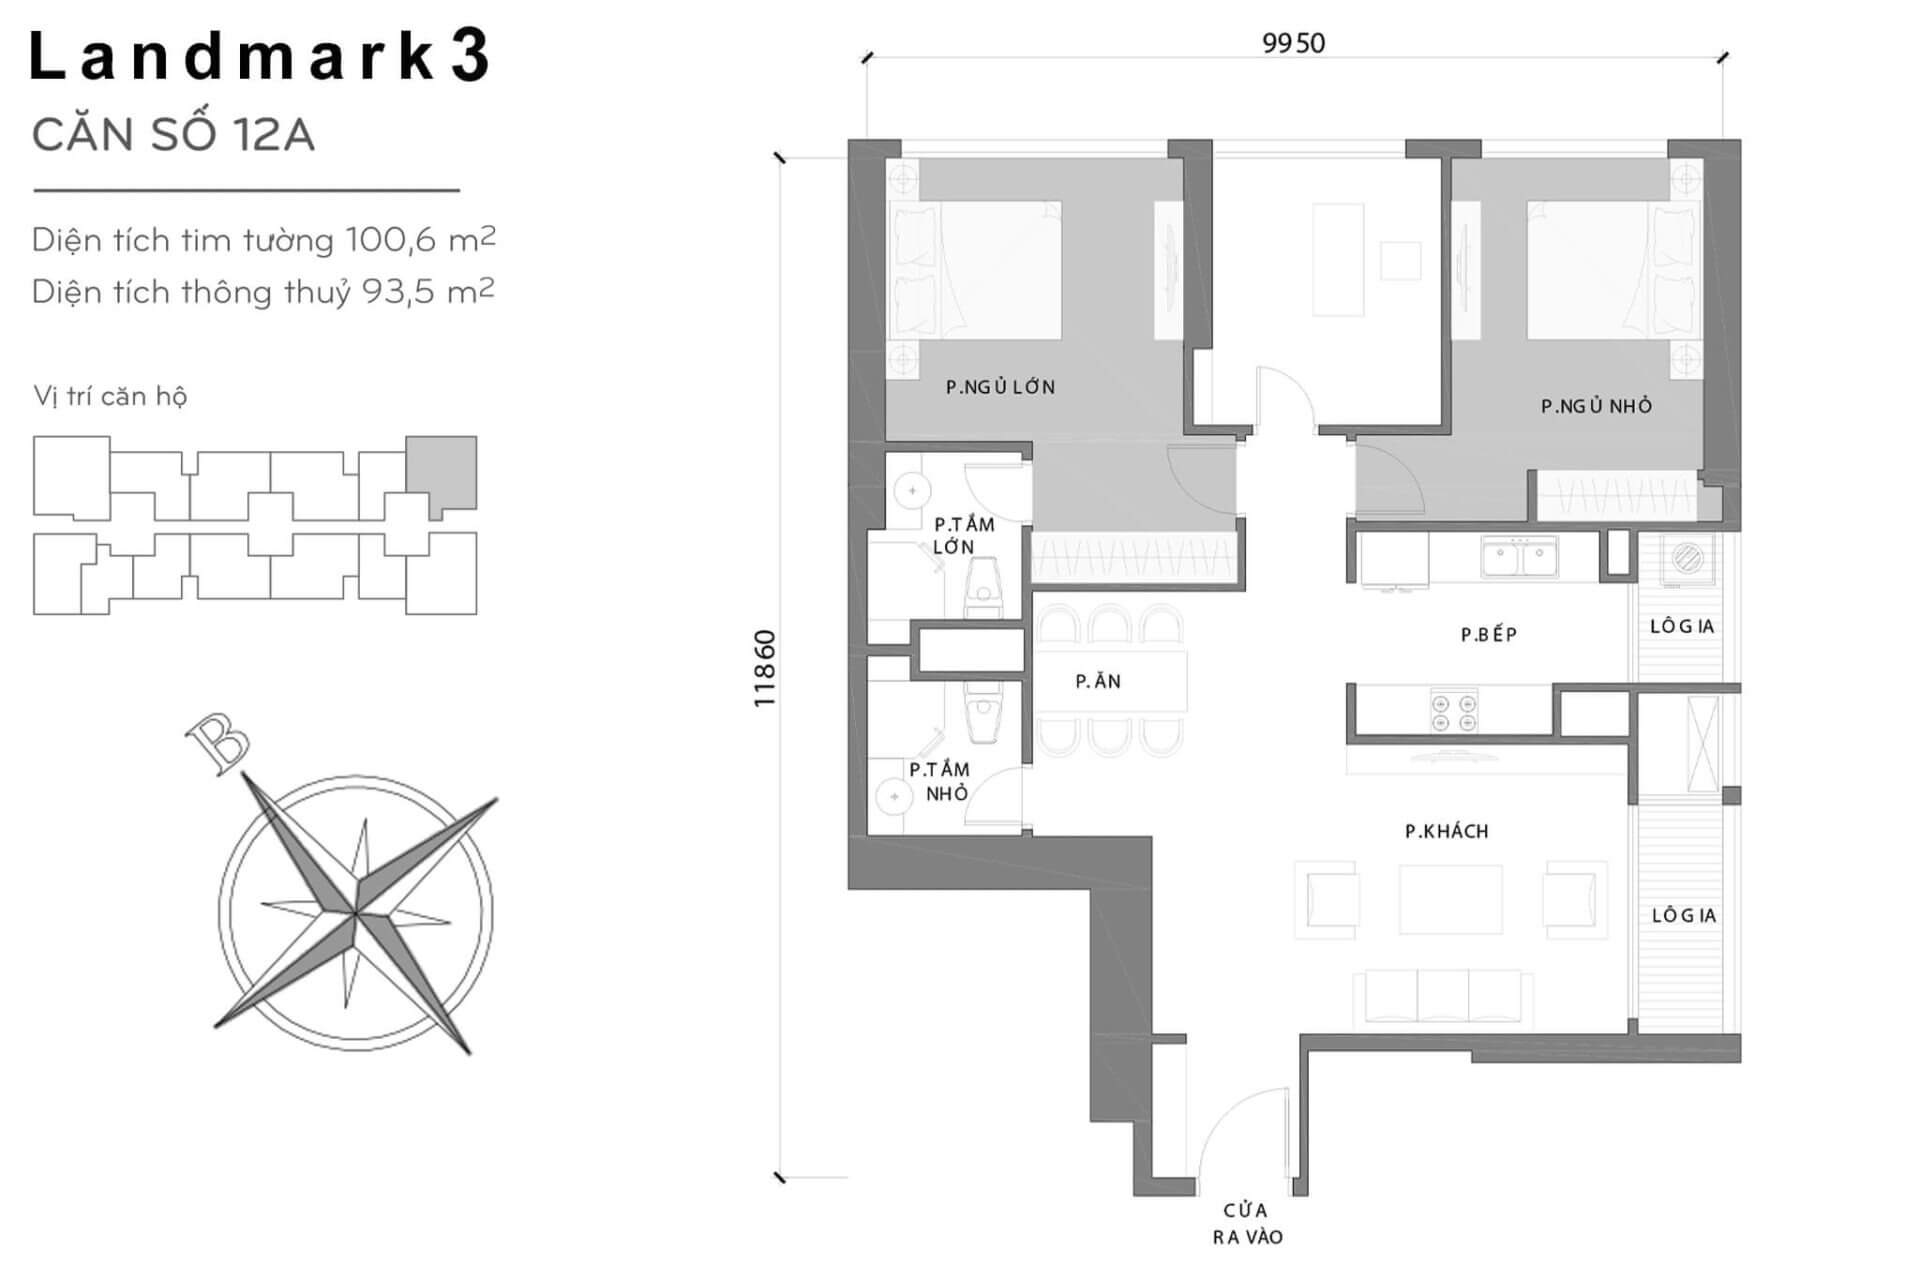 layout căn hộ số 12A Landmark 3 L3-12A